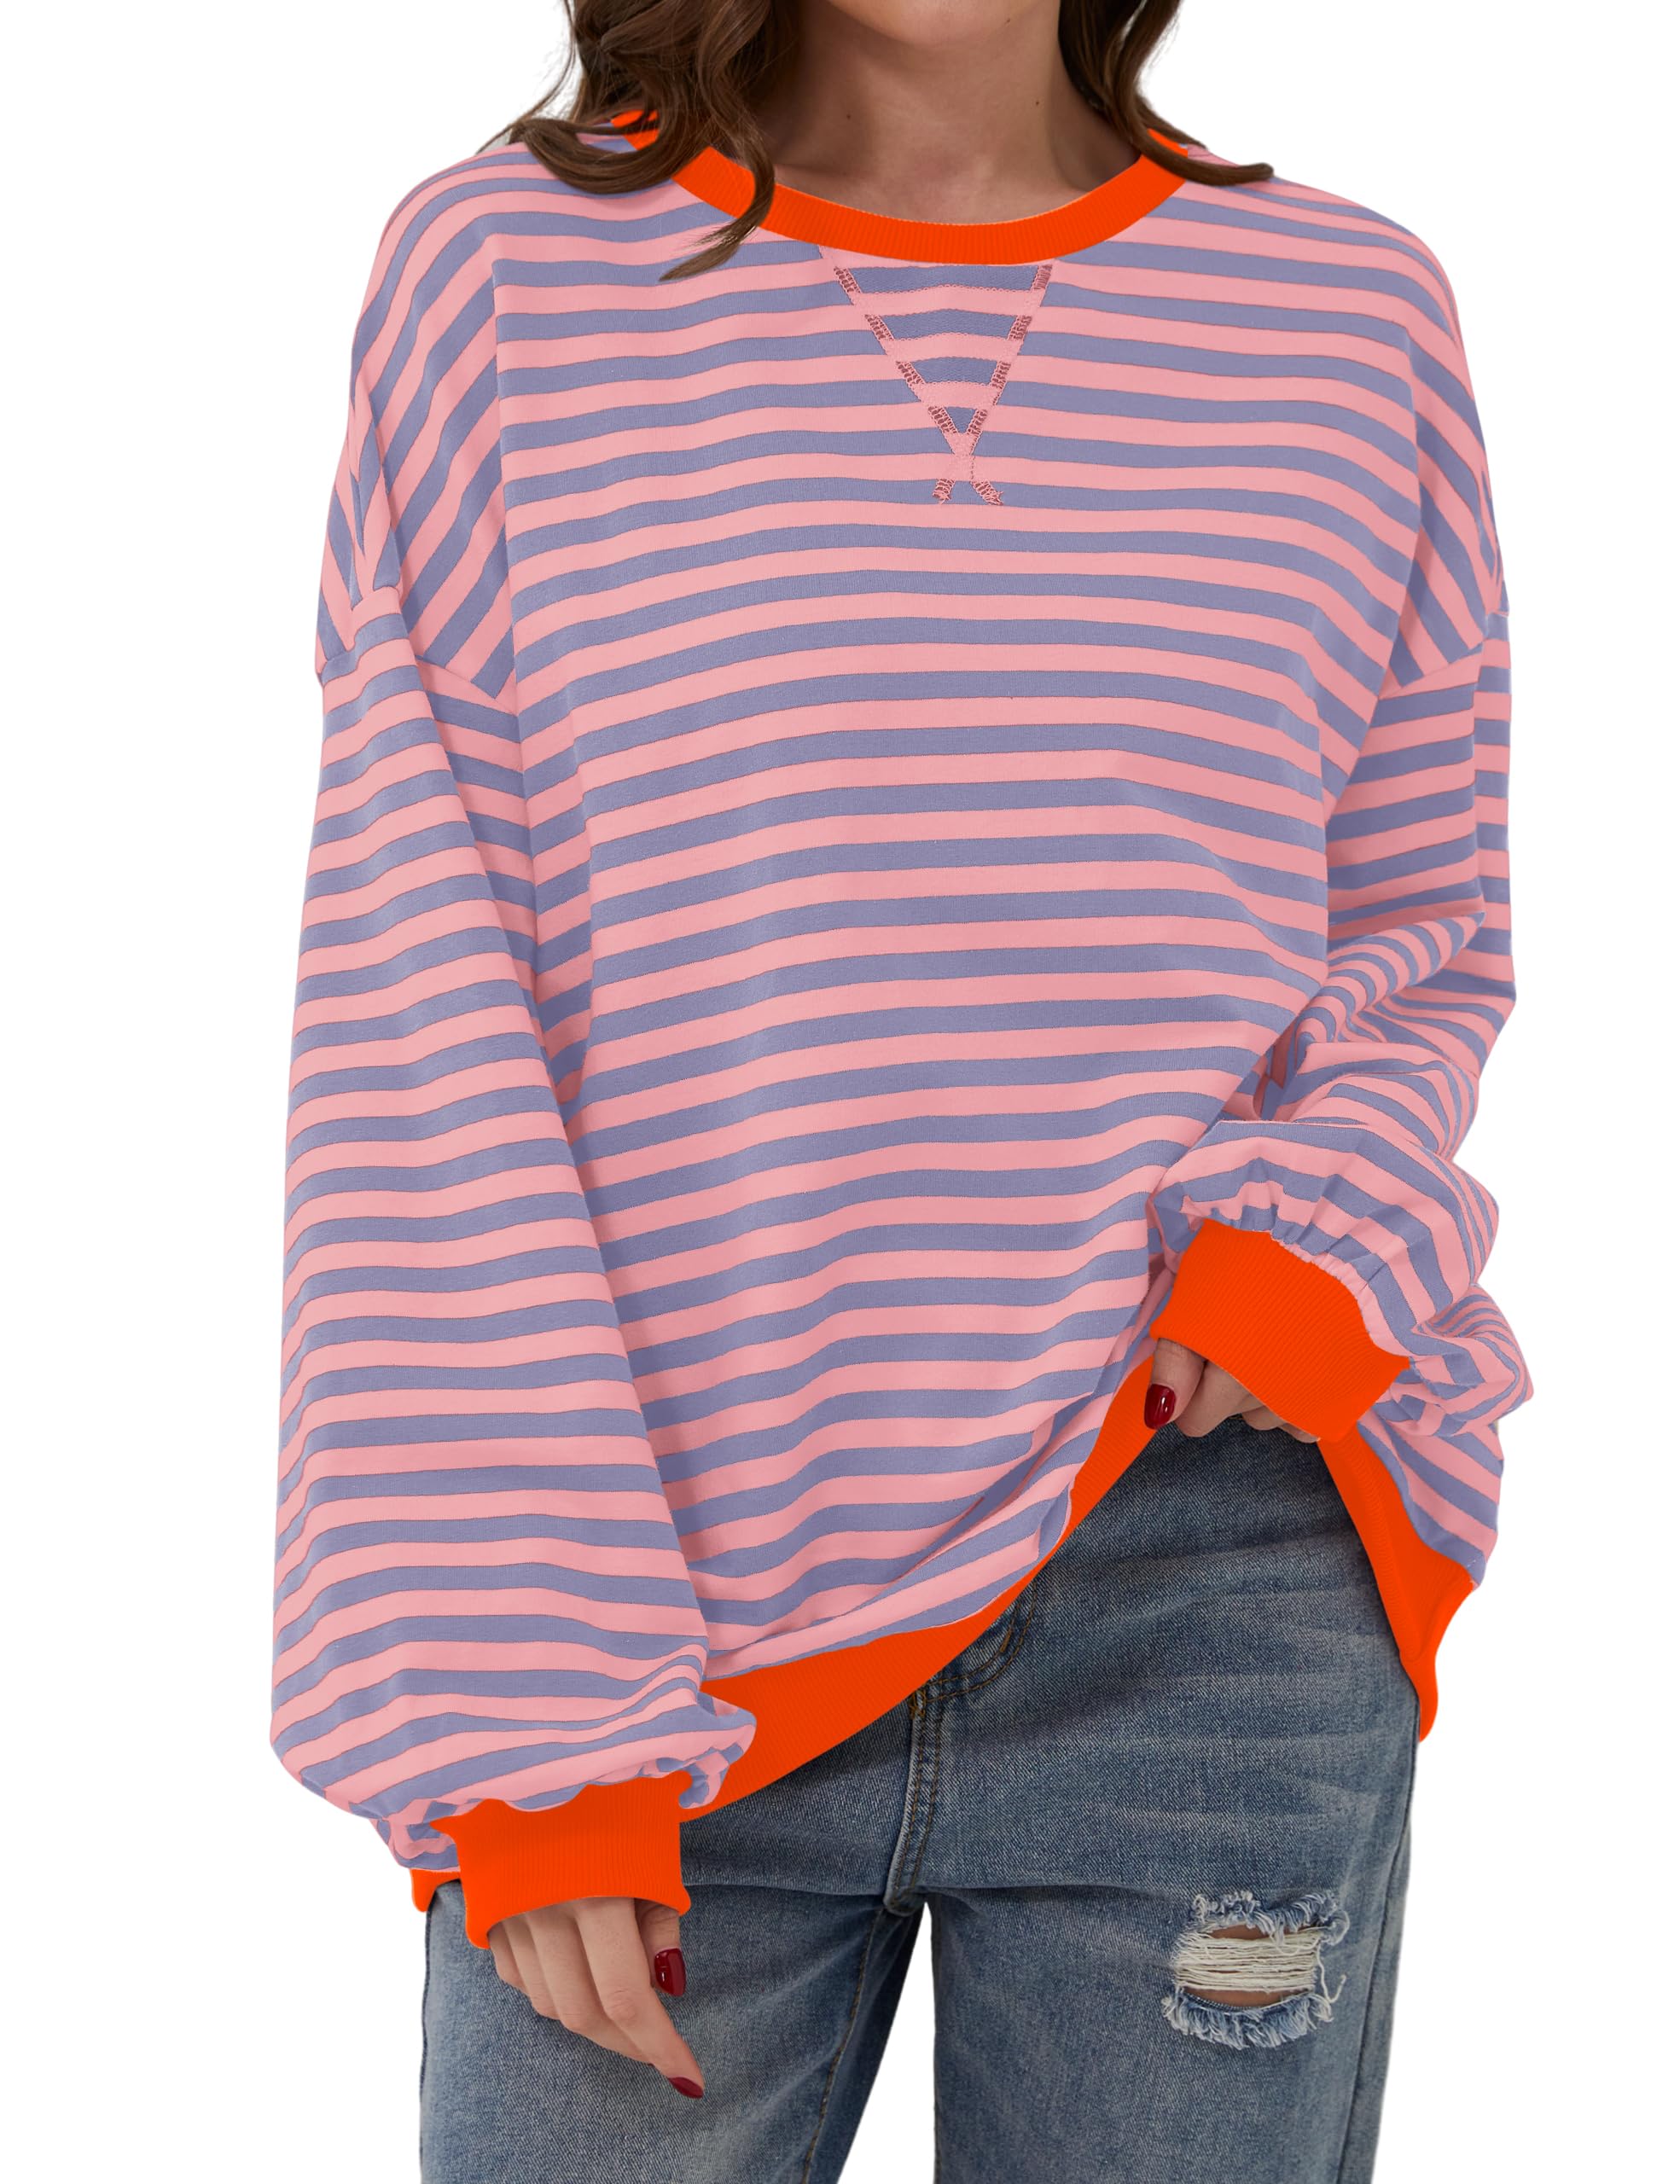 Women Oversized Striped Color Block Long Sleeve Crew Neck Sweatshirt Casual Loose Pullover Y2K Shirt Top